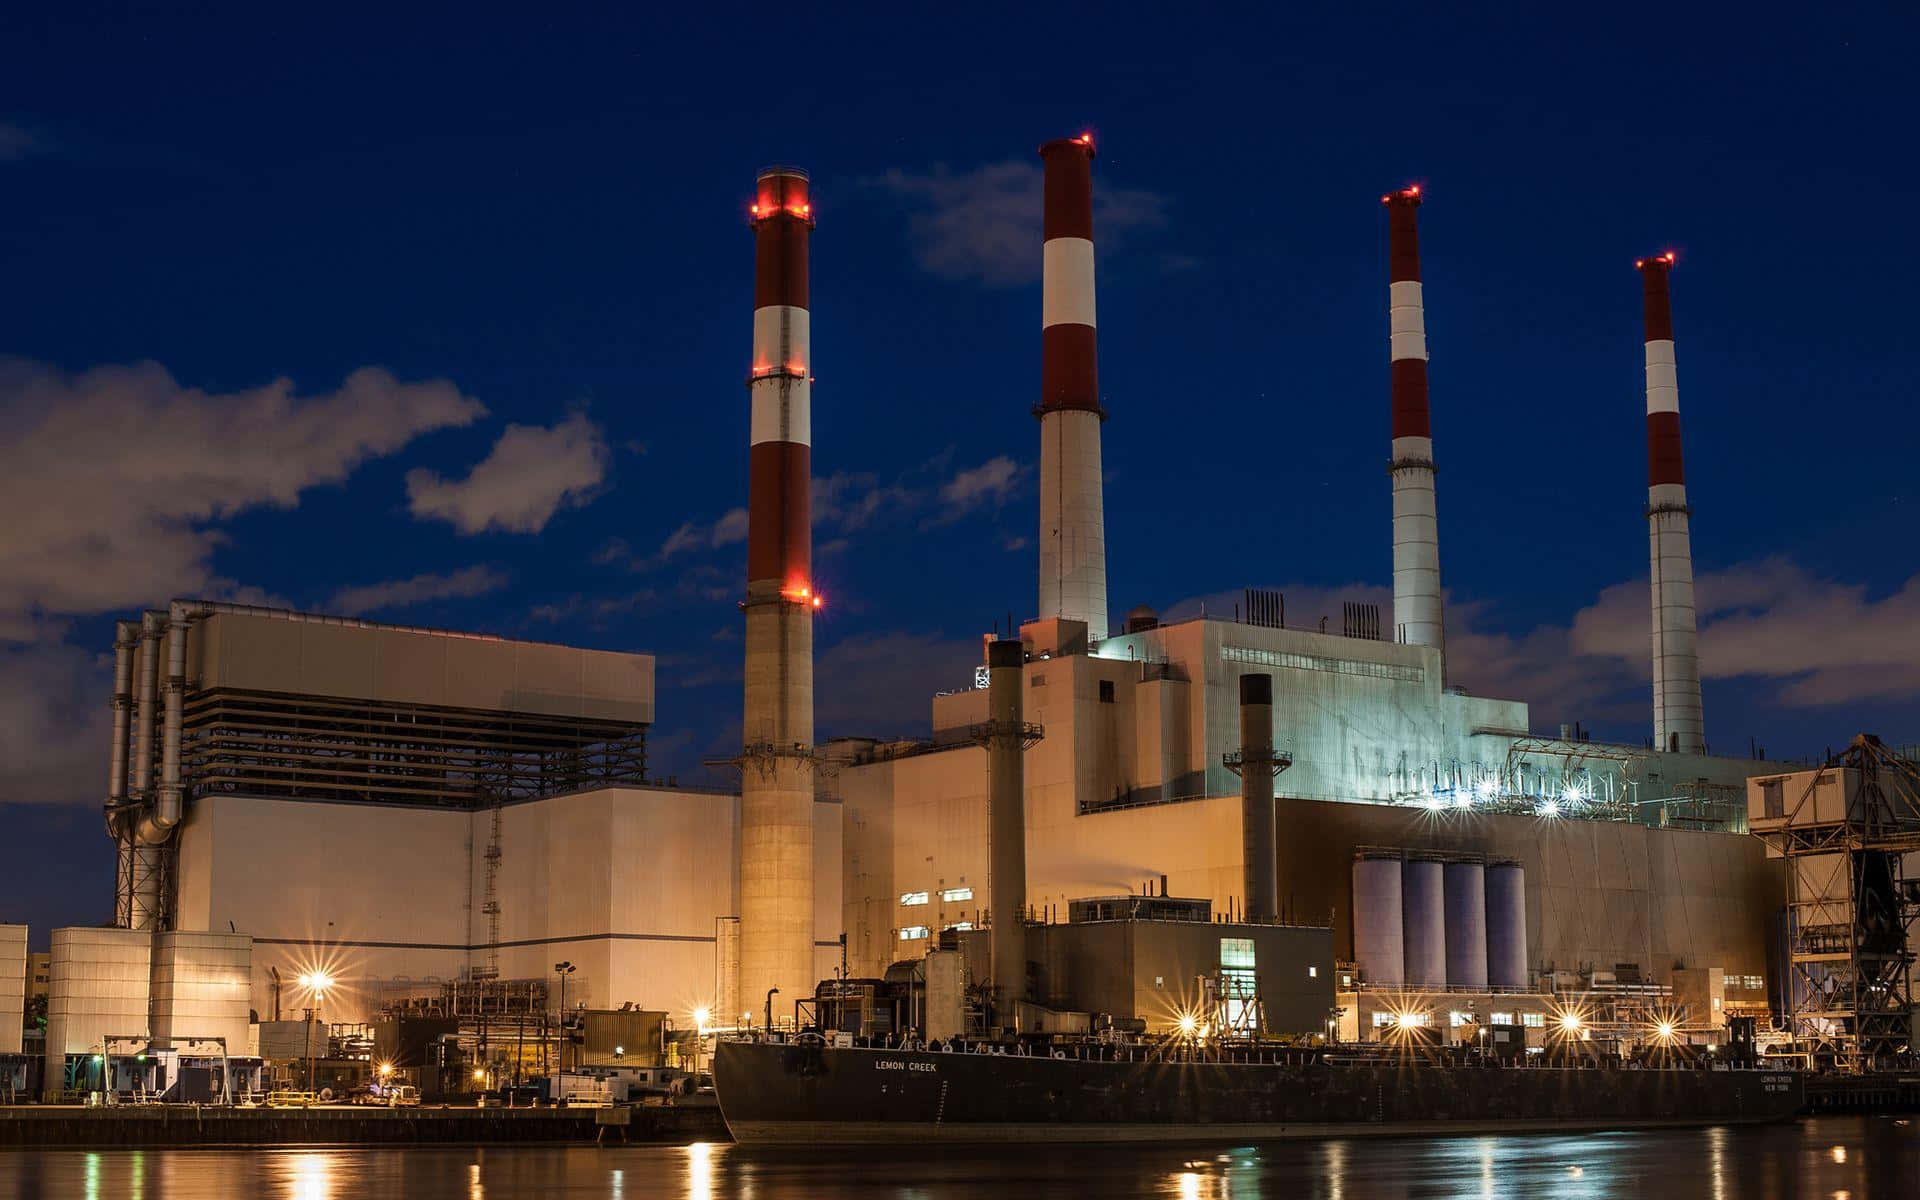 Industrial Power Plant Night Skyline.jpg Wallpaper